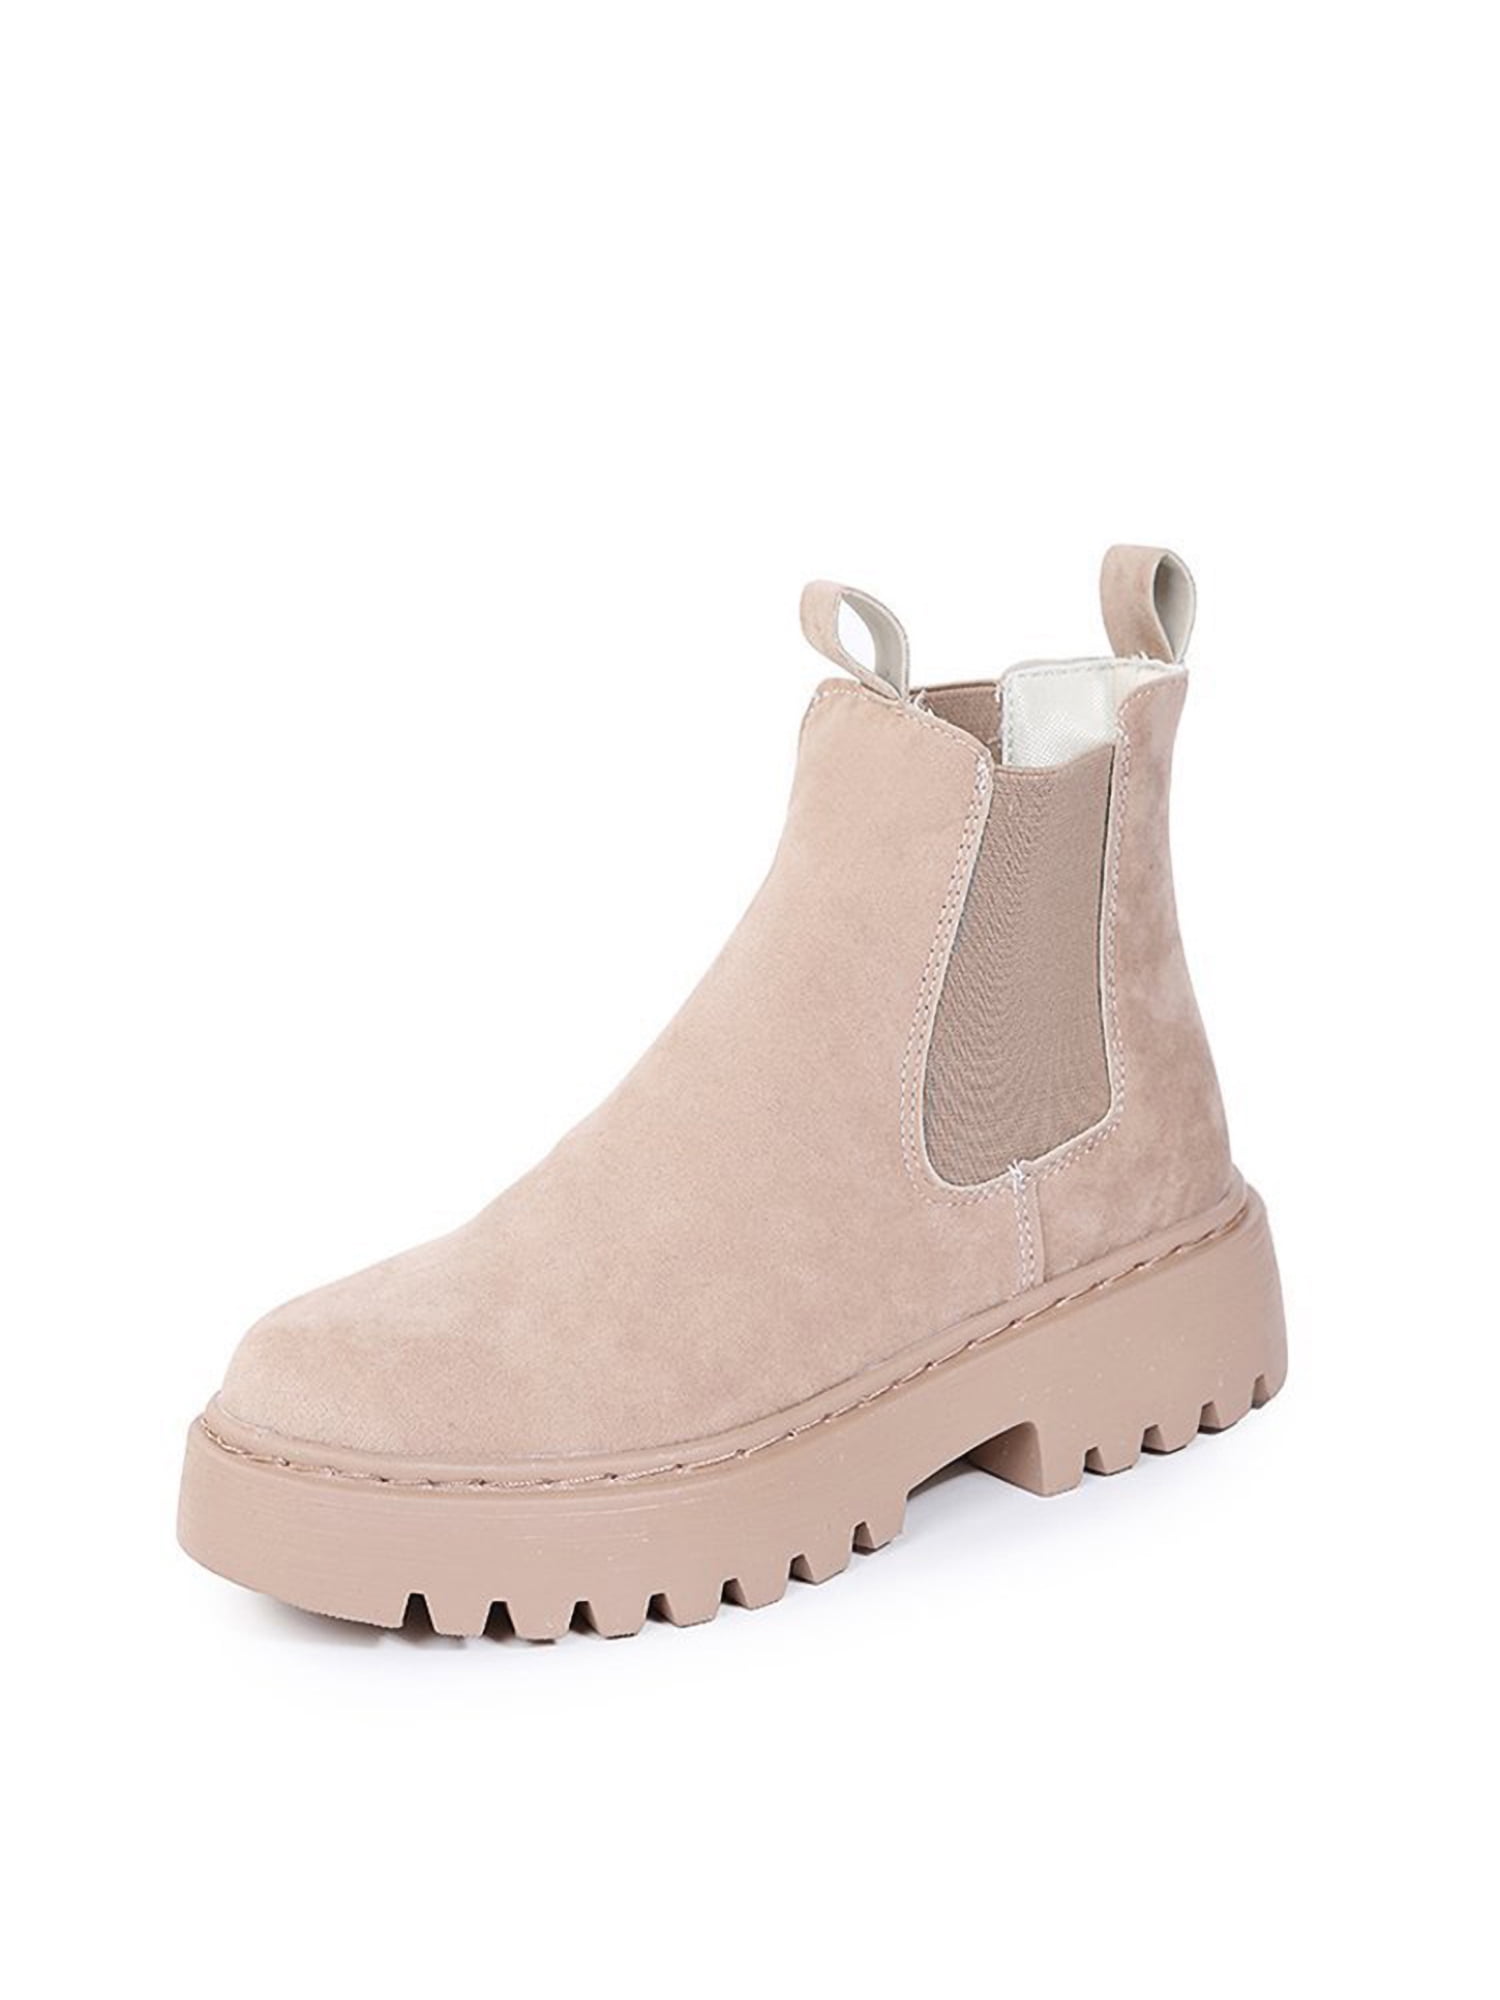 Ladies Anti-Slip Chelsea Boot Walking Elastic Shoes Wear Resistant Ankle Boots Beige 5.5 - Walmart.com